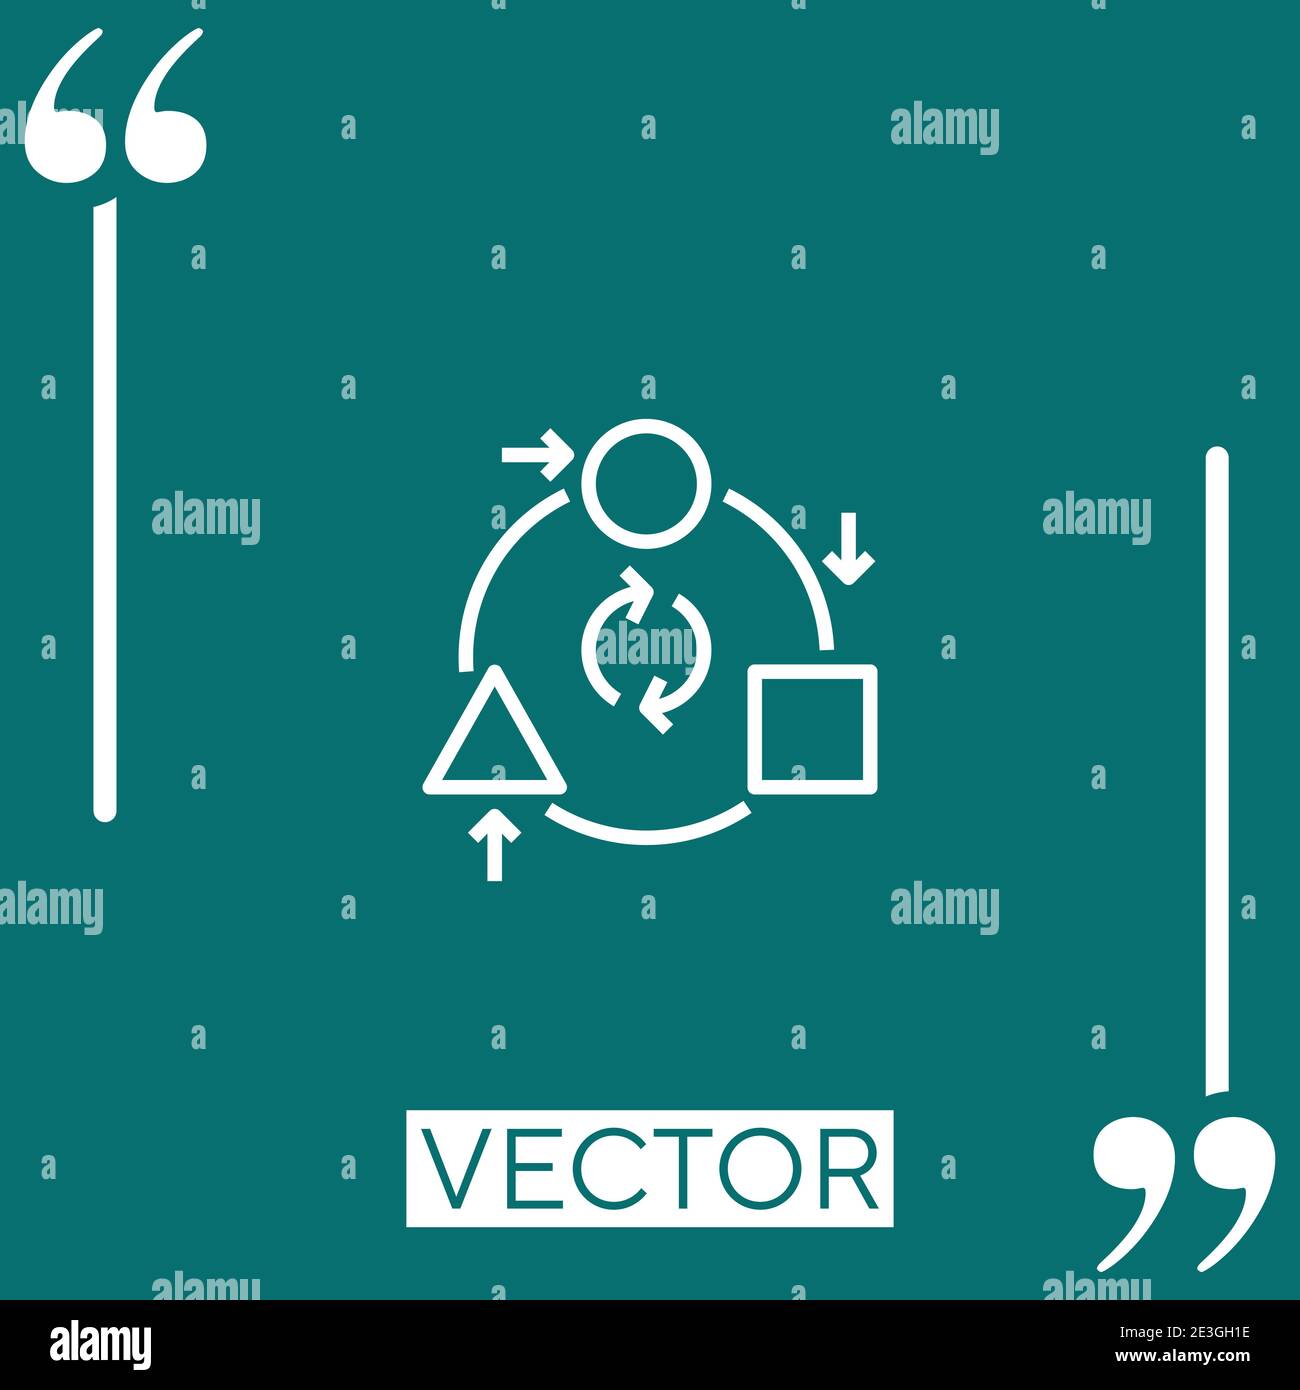 adaptation vector icon Linear icon. Editable stroke line Stock Vector